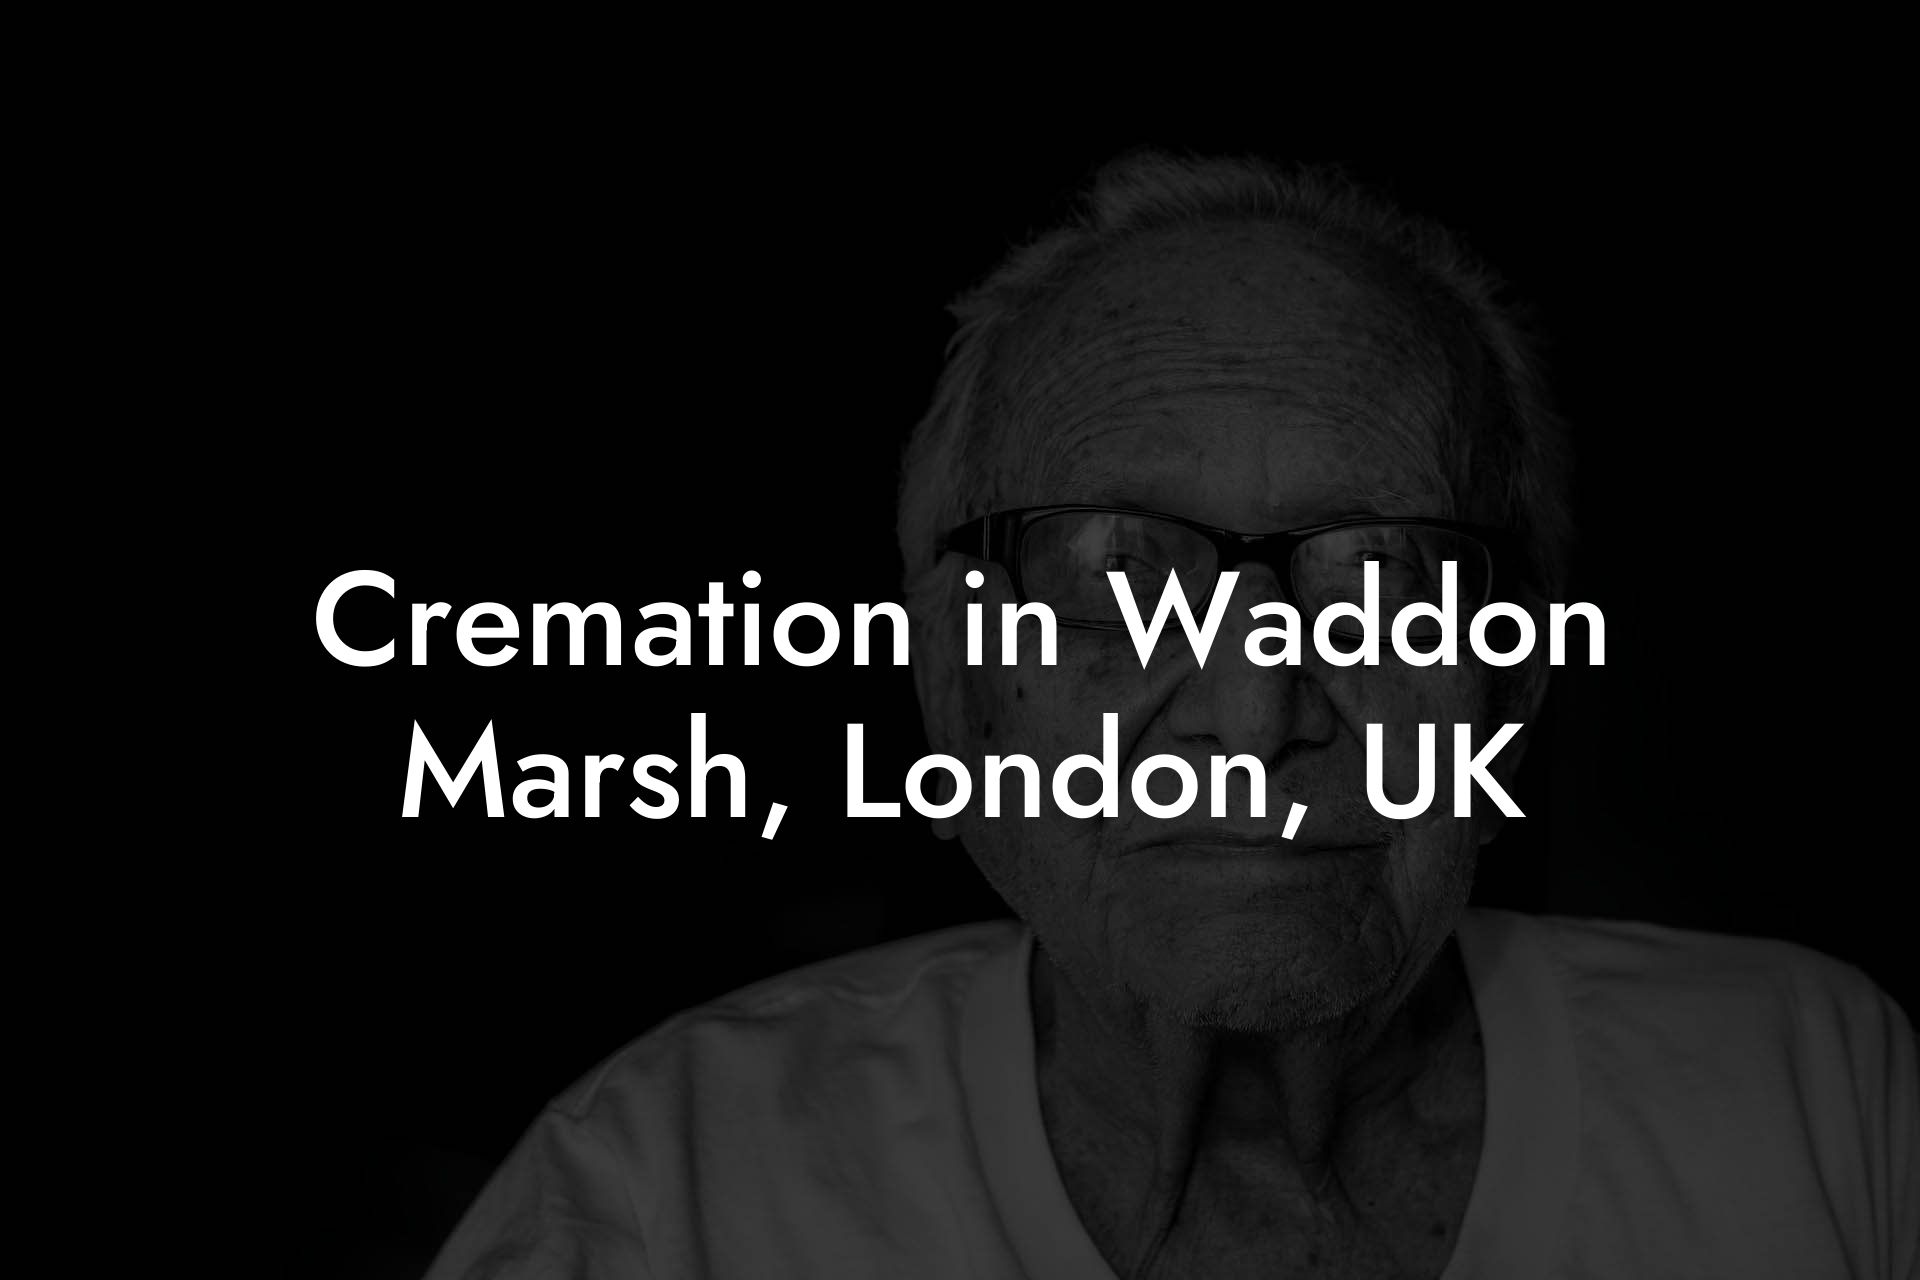 Cremation in Waddon Marsh, London, UK